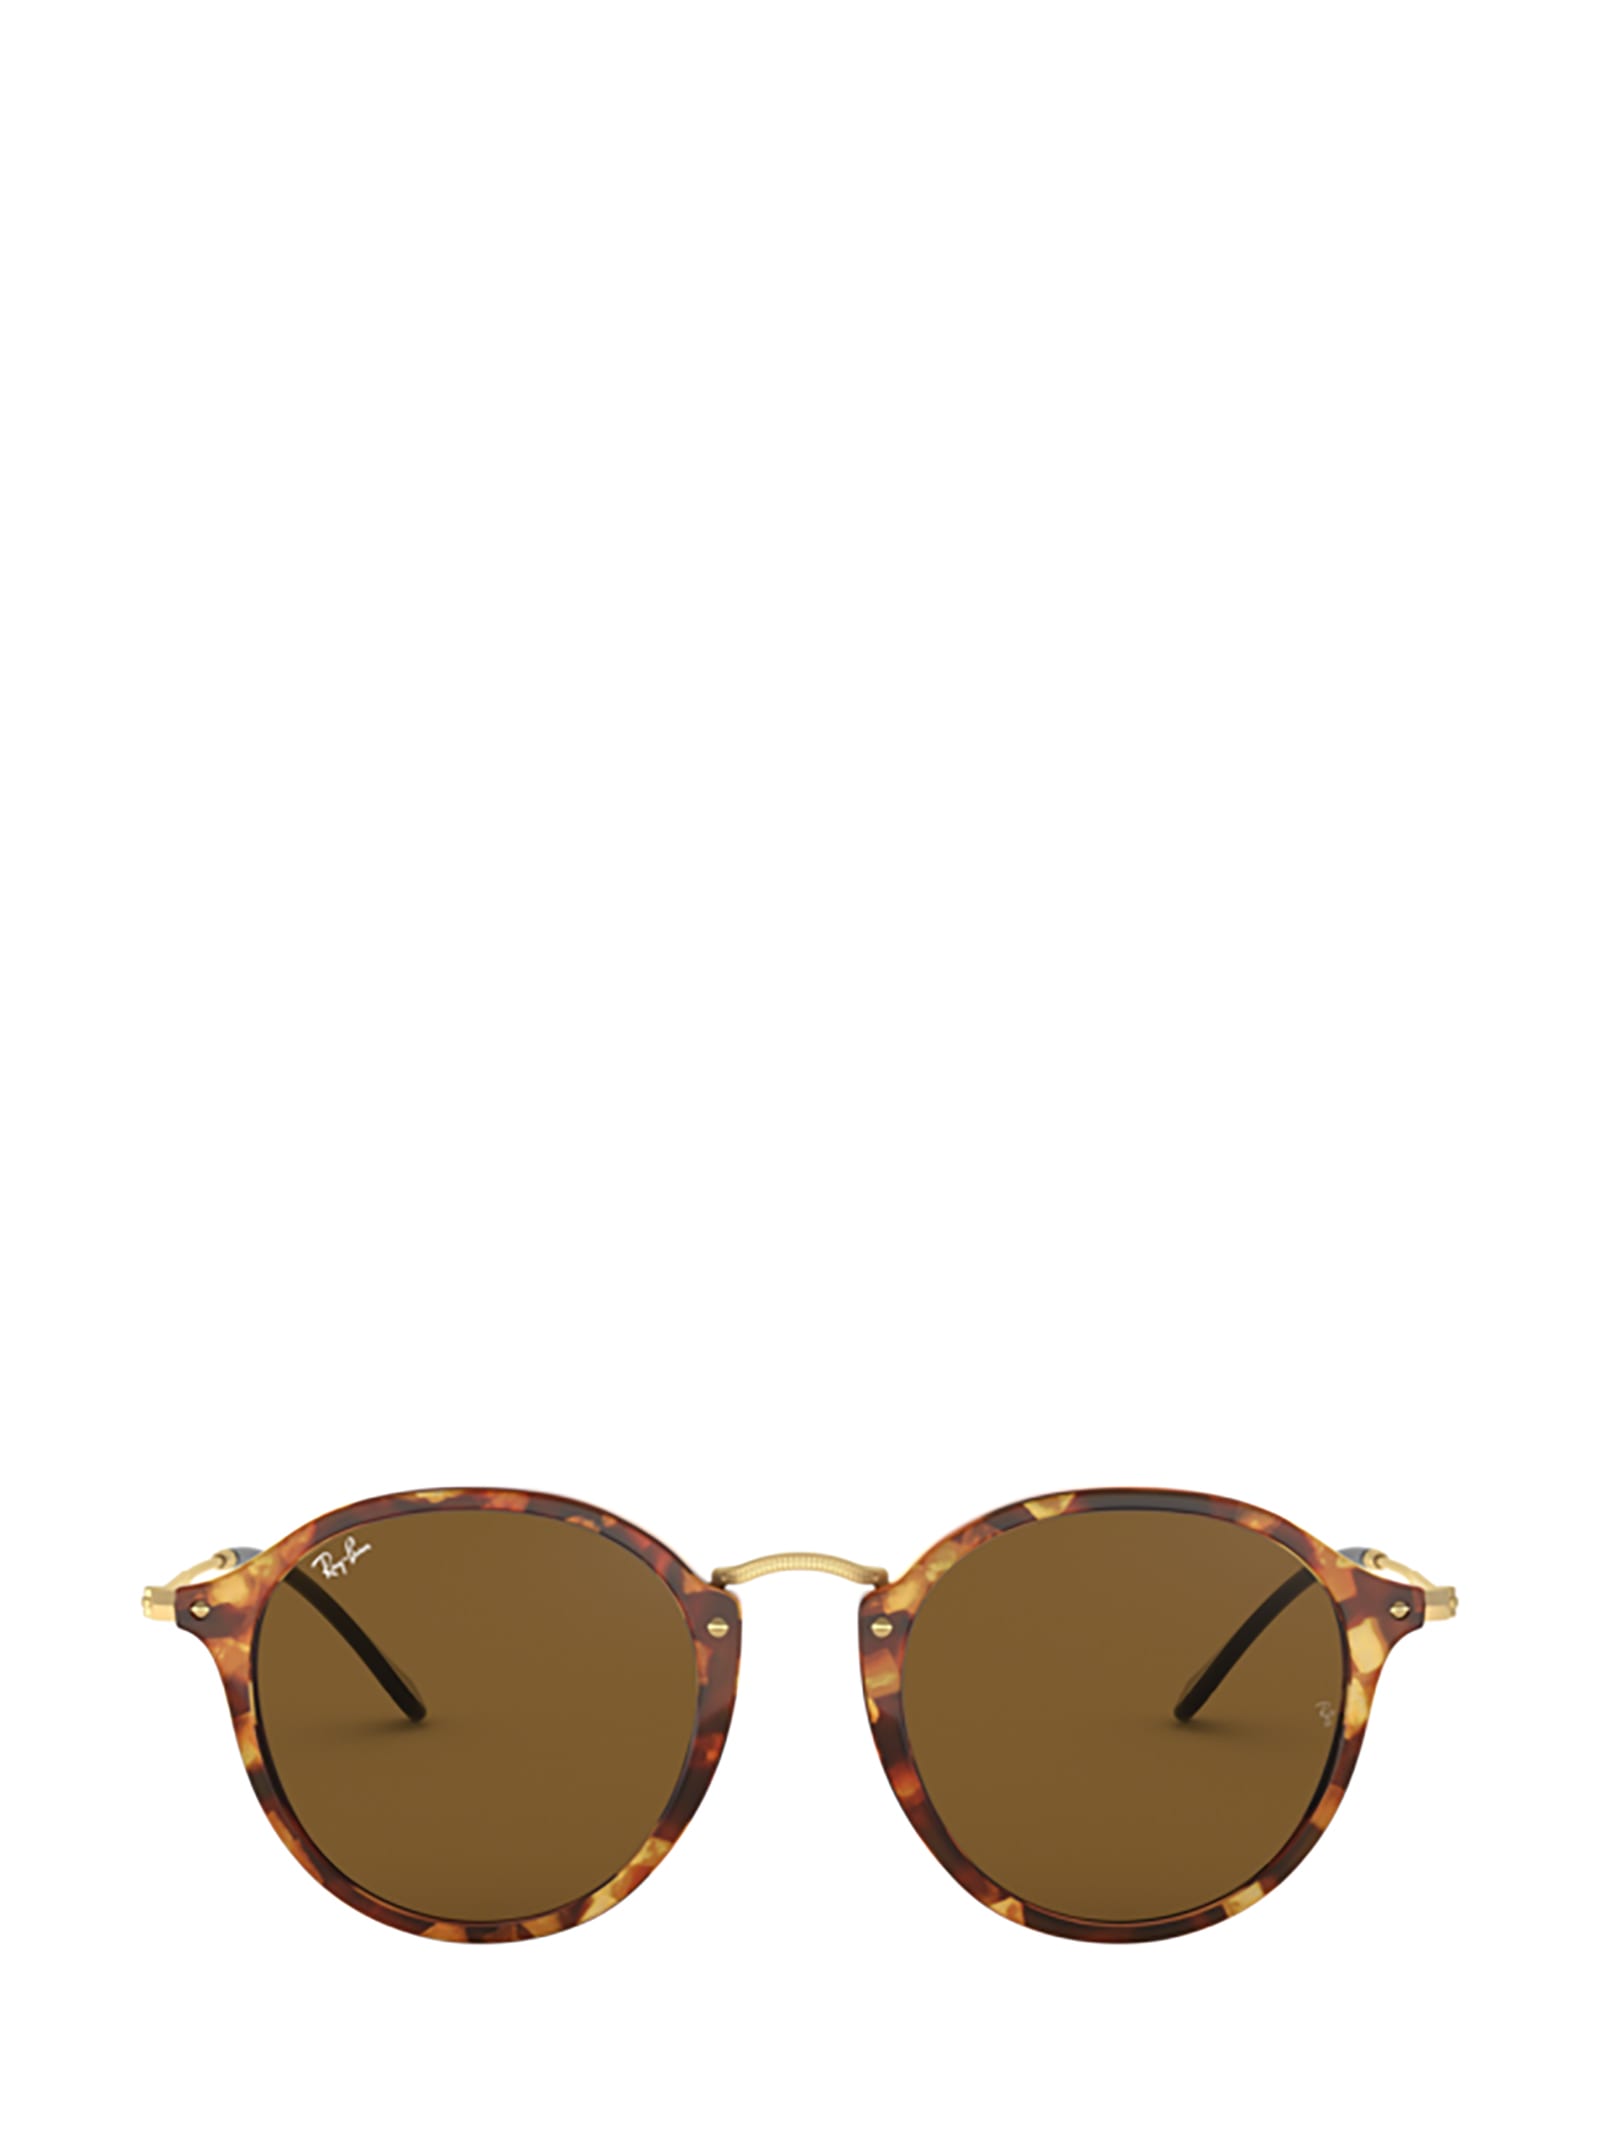 Ray-Ban Ray-ban Rb2447 Spotted Brown Havana Sunglasses